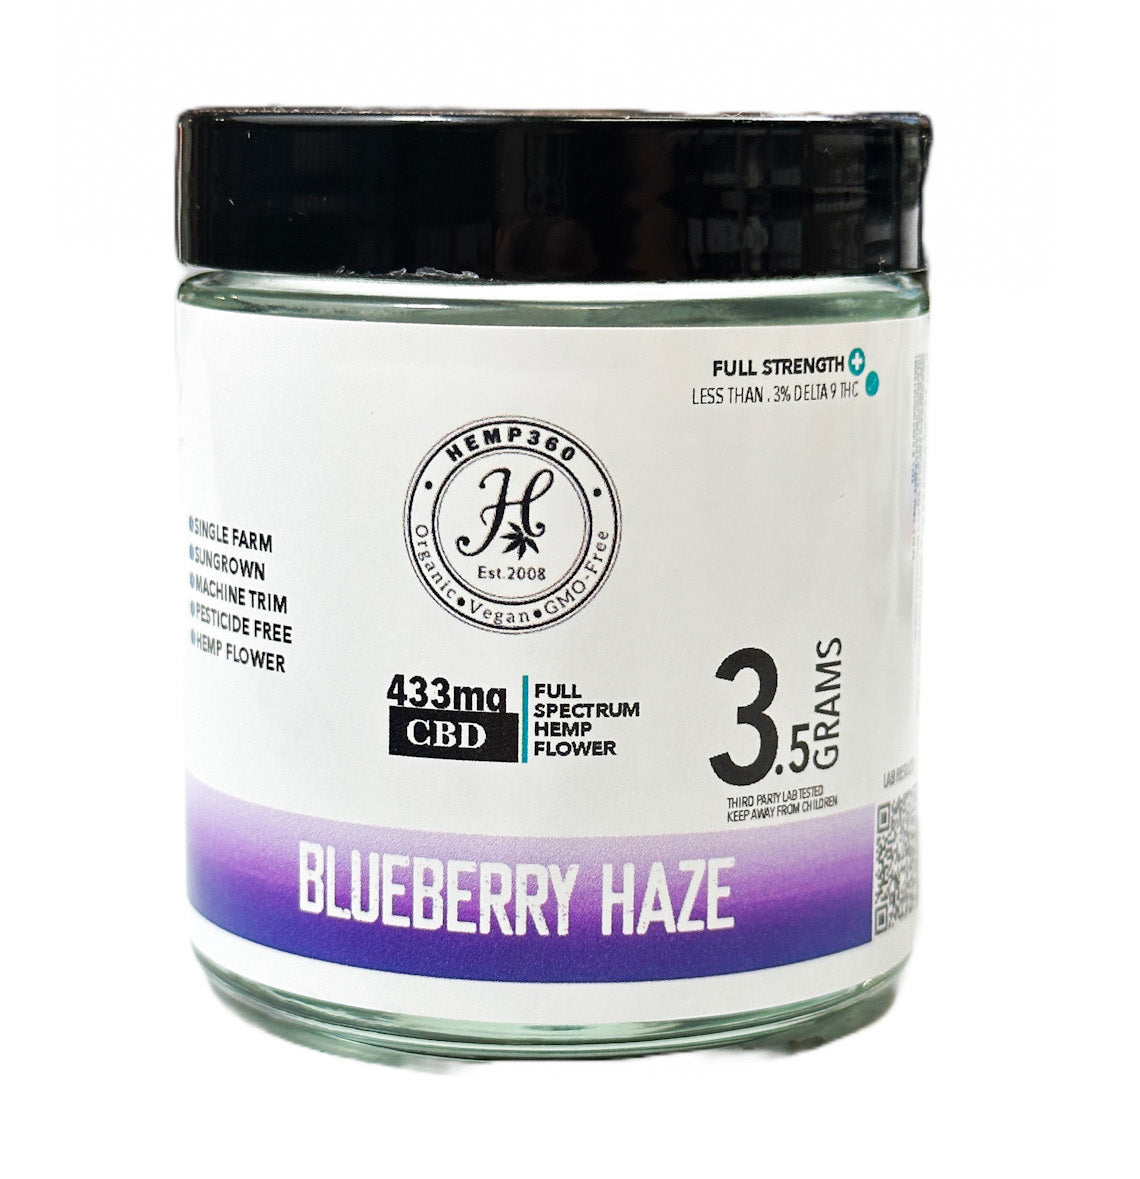 *New* Blueberry Haze CBD Flower